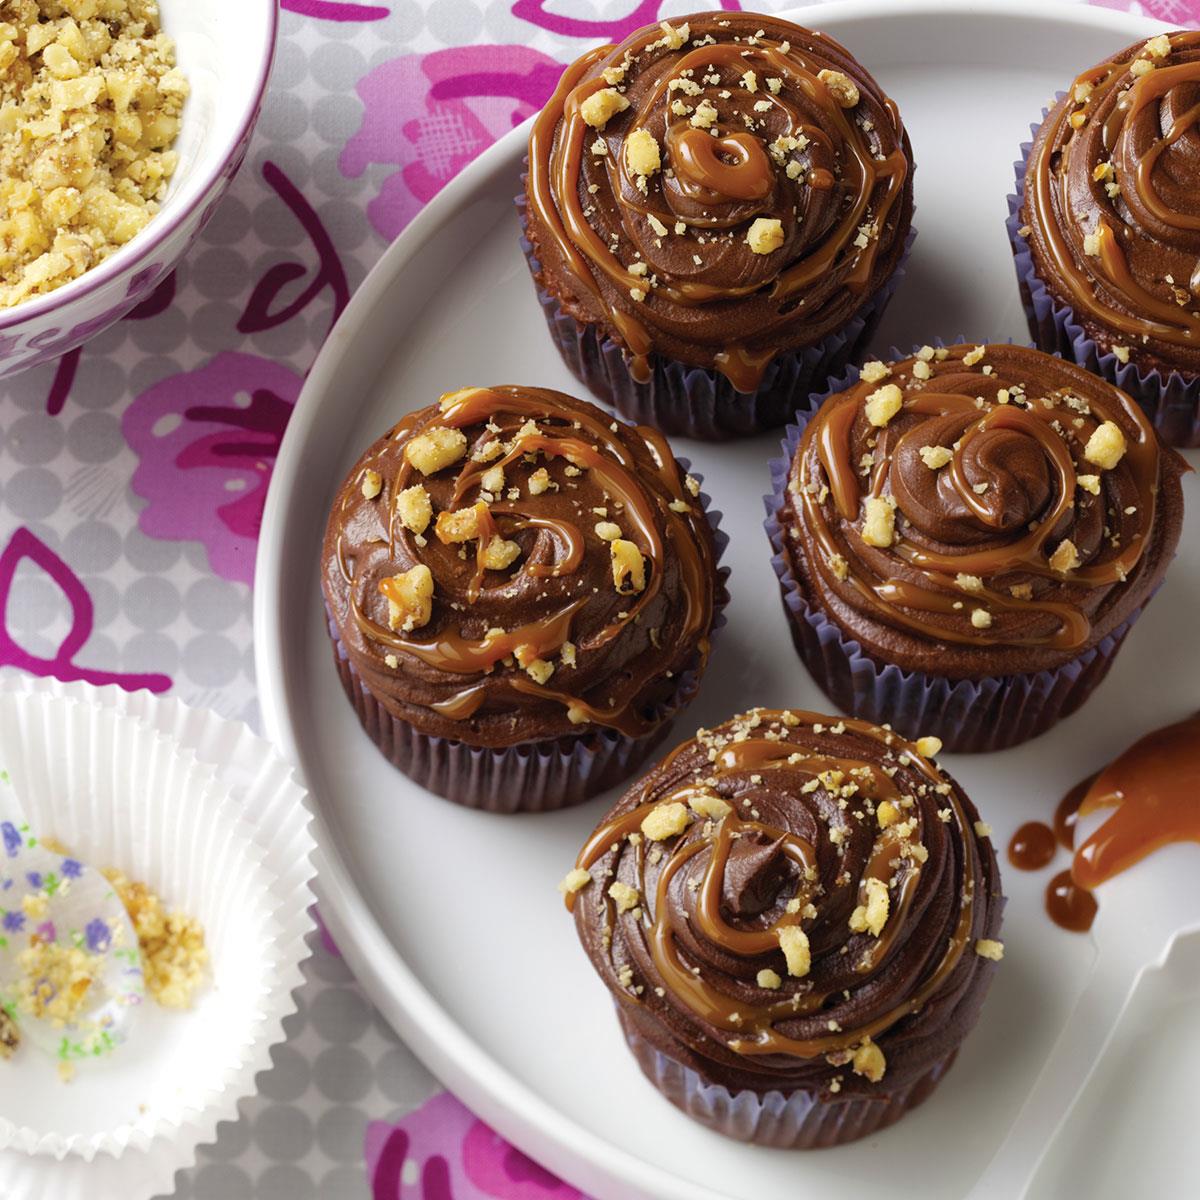 Chocolate Caramel Cupcakes Recipe: How to Make It